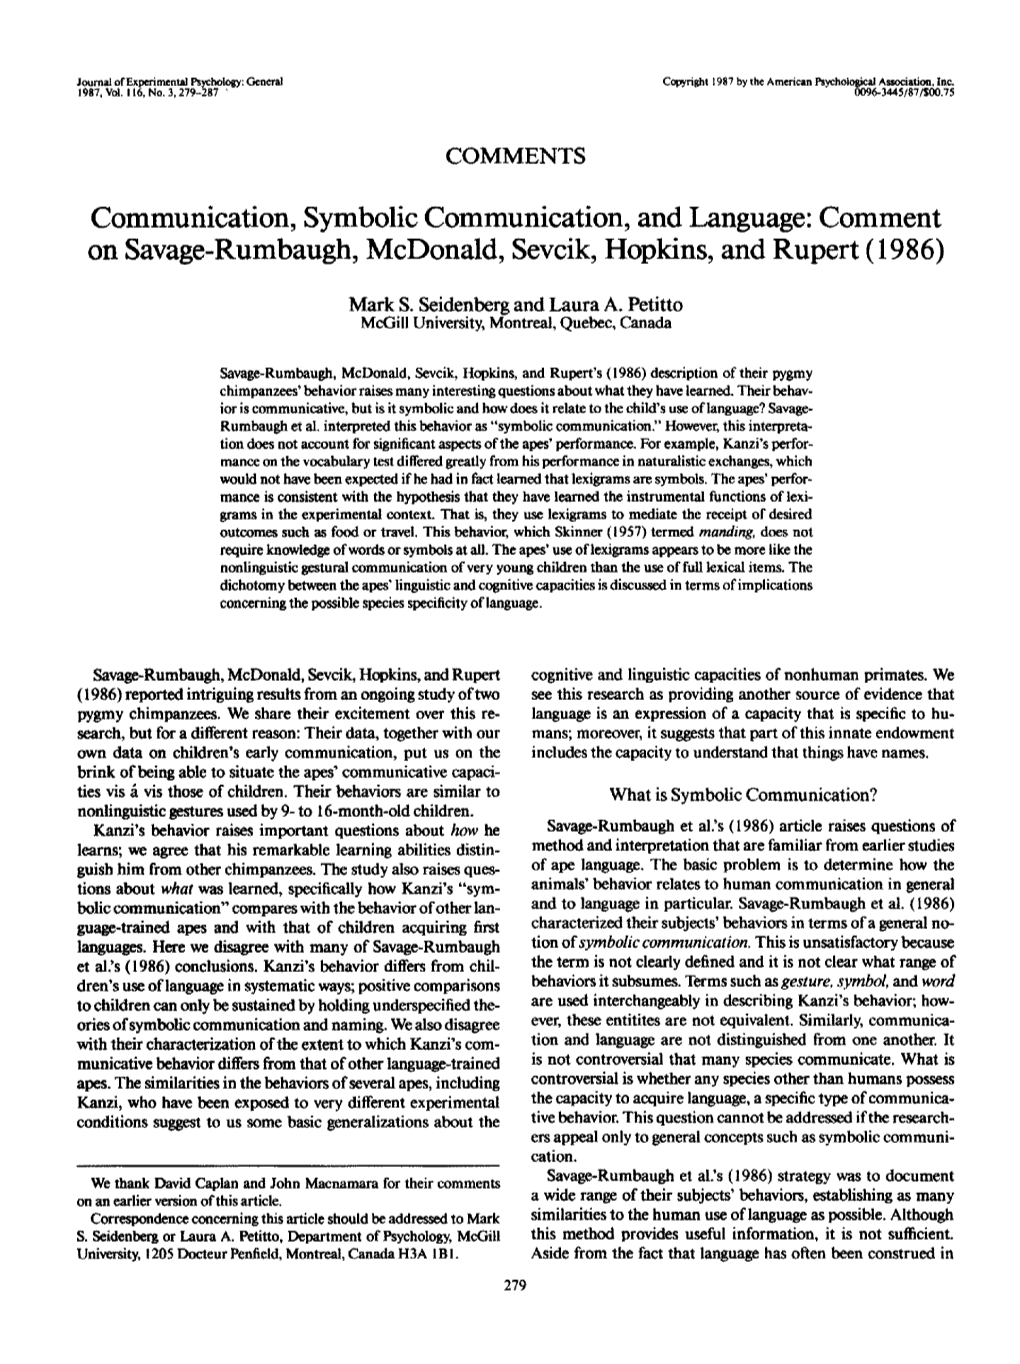 Communication, Symbolic Communication, and Language: Comment on Savage-Rumbaugh, Mcdonald, Sevcik, Hopkins, and Rupert (1986)